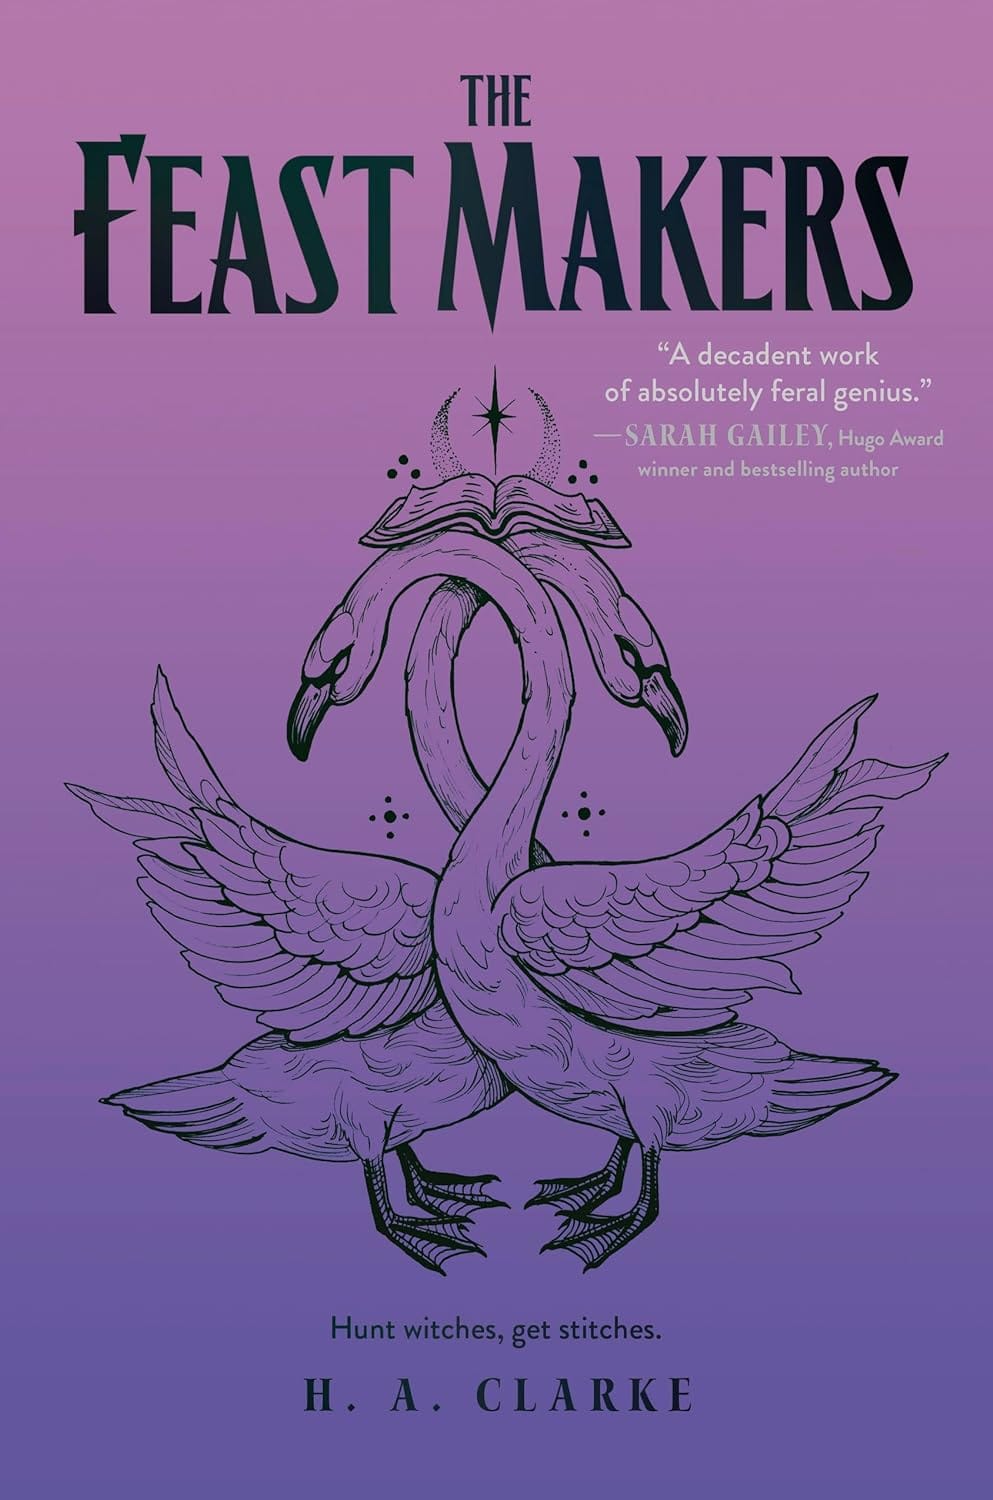 Feast Makers, Ghosts, Locus